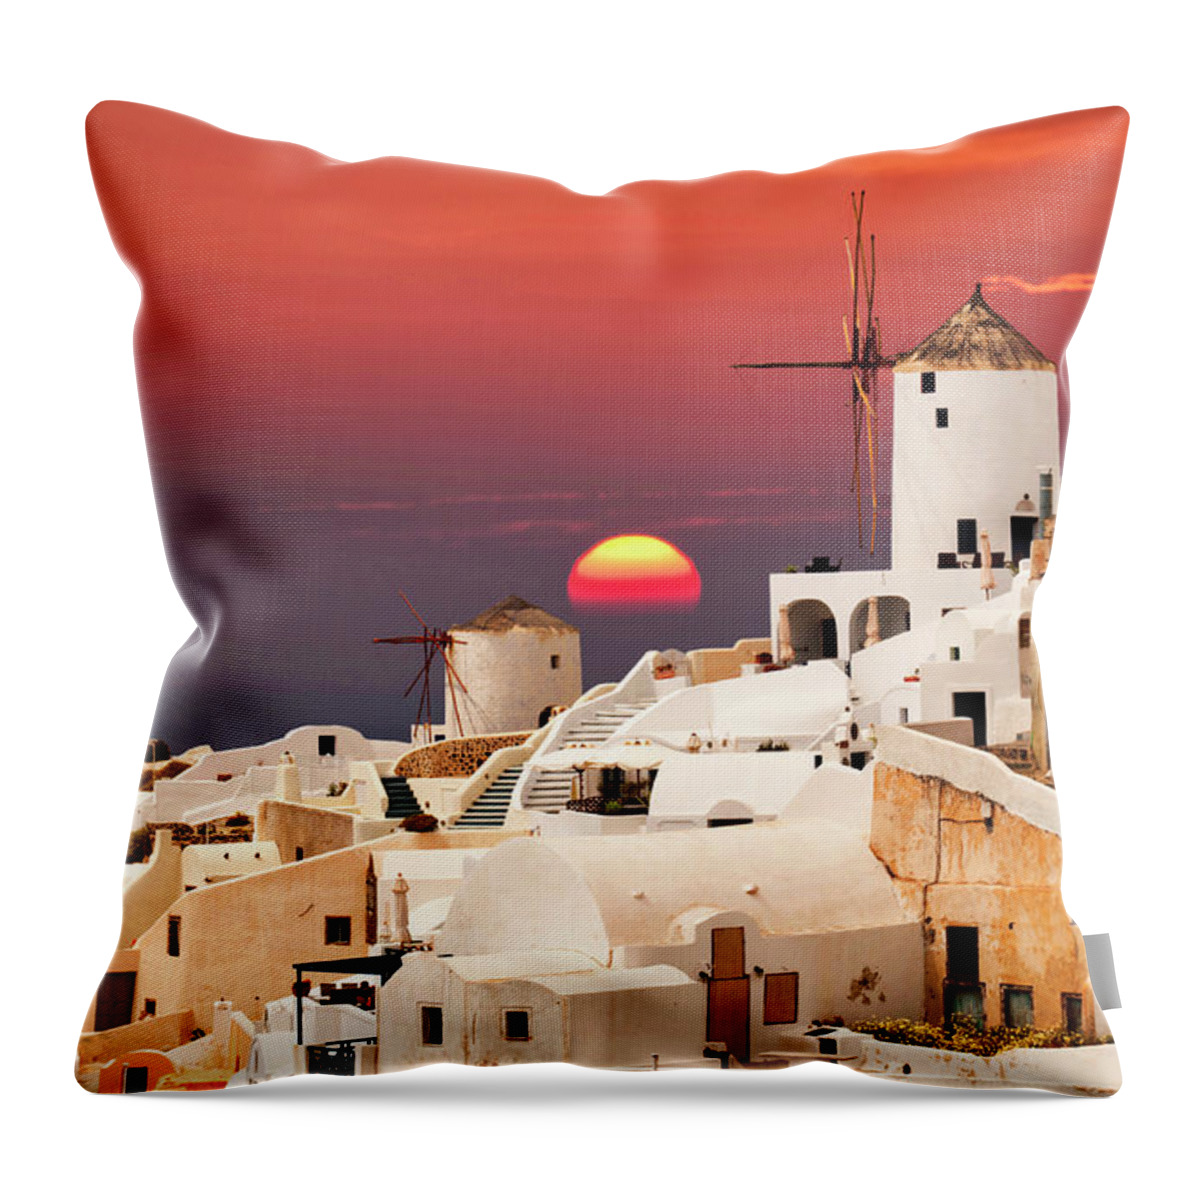  Throw Pillow featuring the photograph sunset at Santorini by Usha Peddamatham